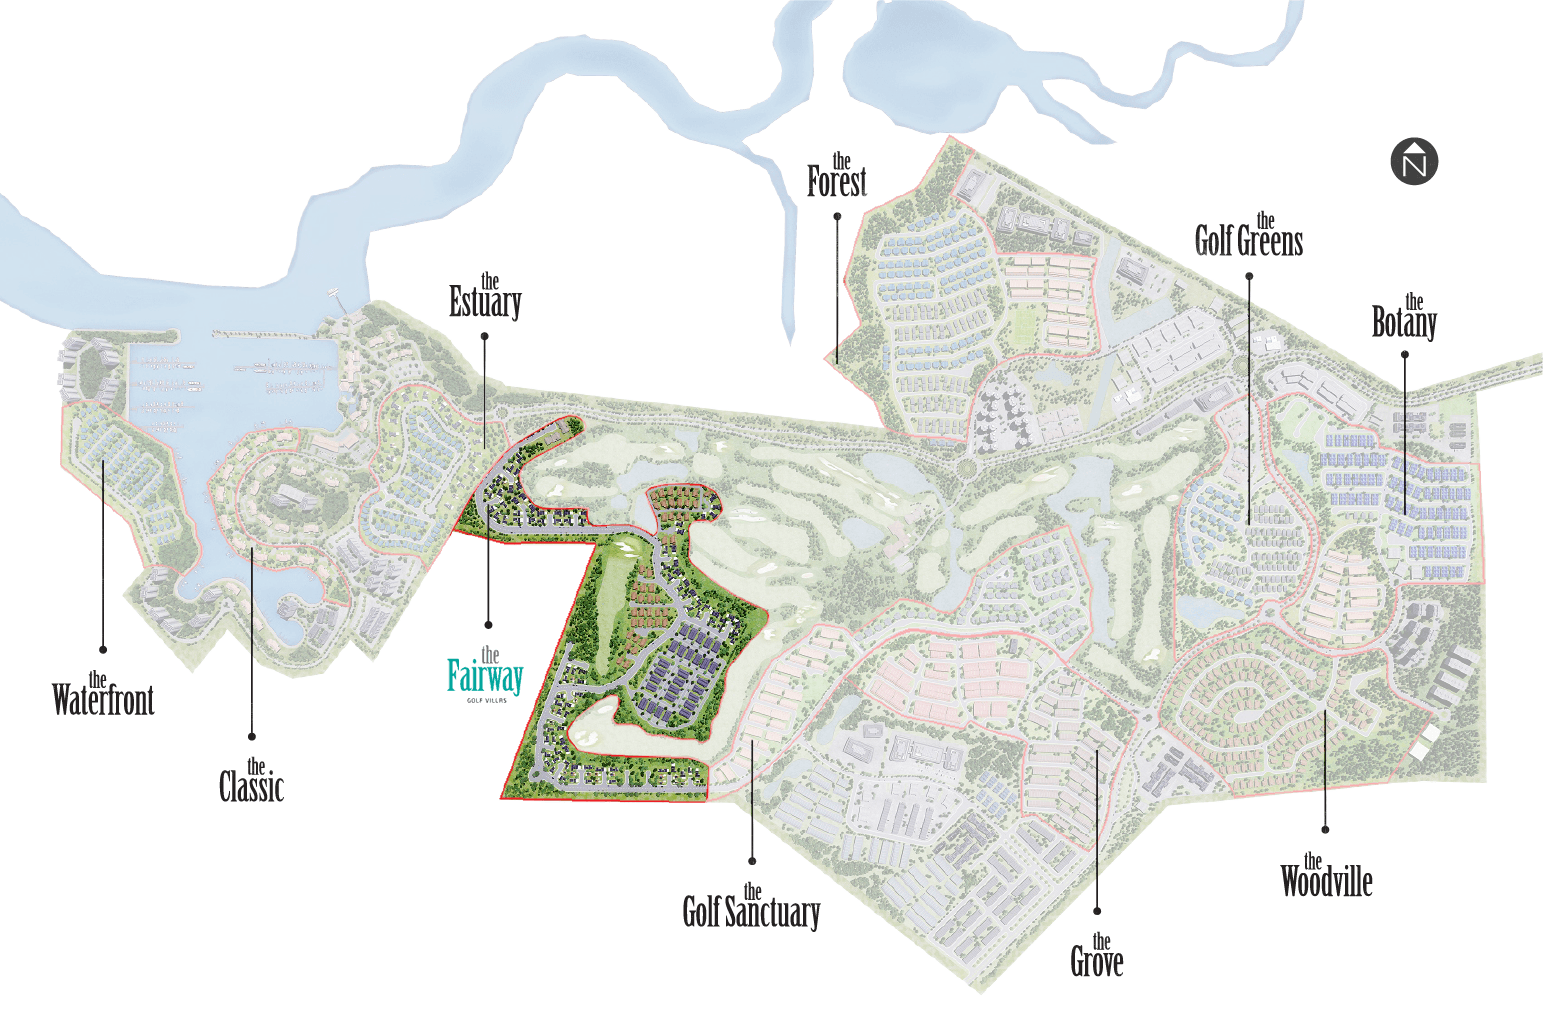 The Fairway siteplan